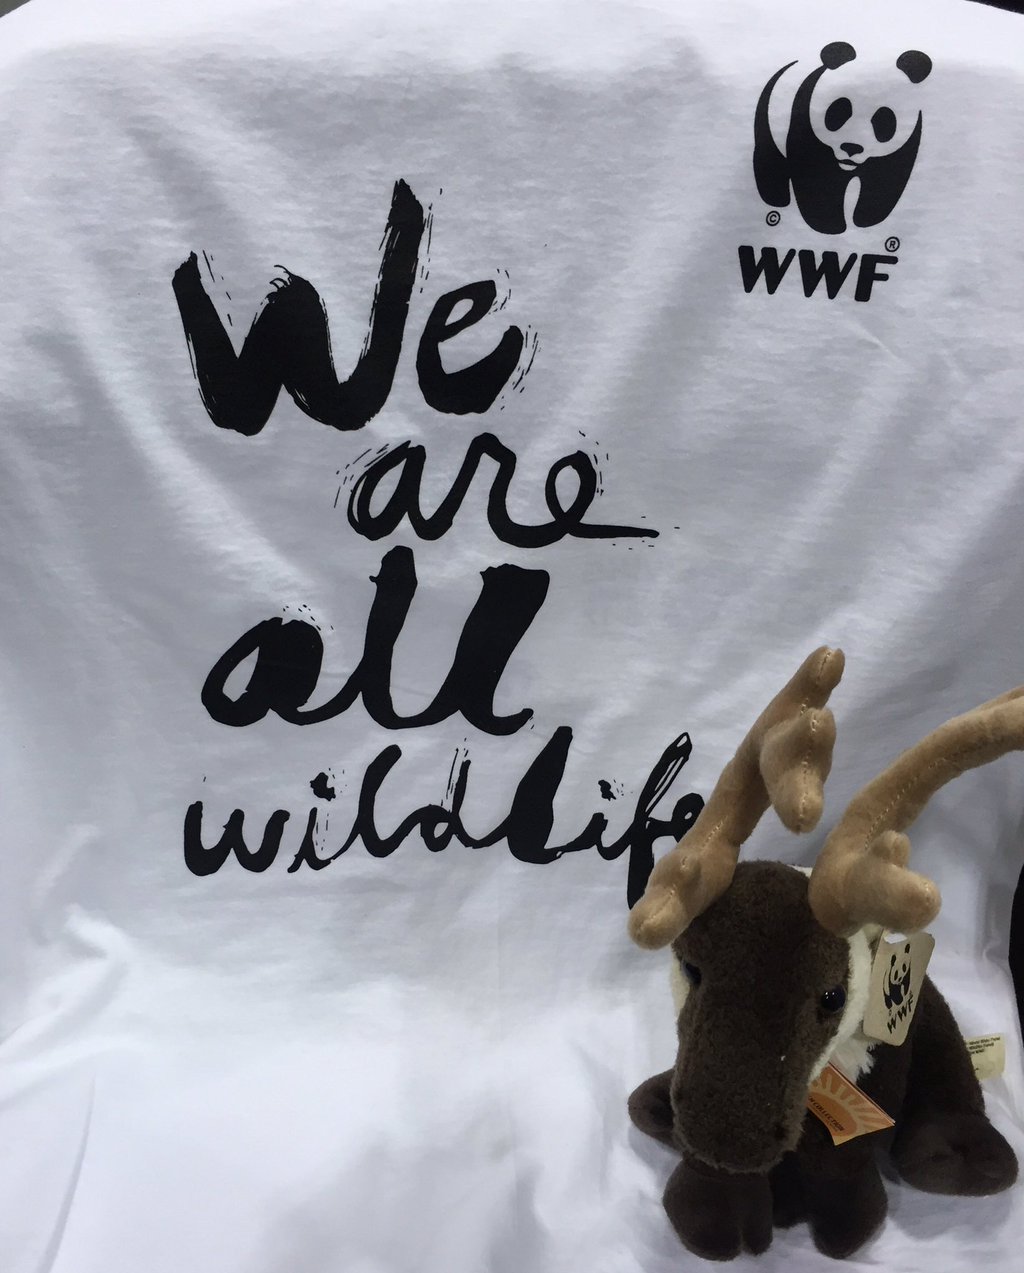 Custom t-shirt for World Wildlife Fund organization printed for the CN Tower climb.